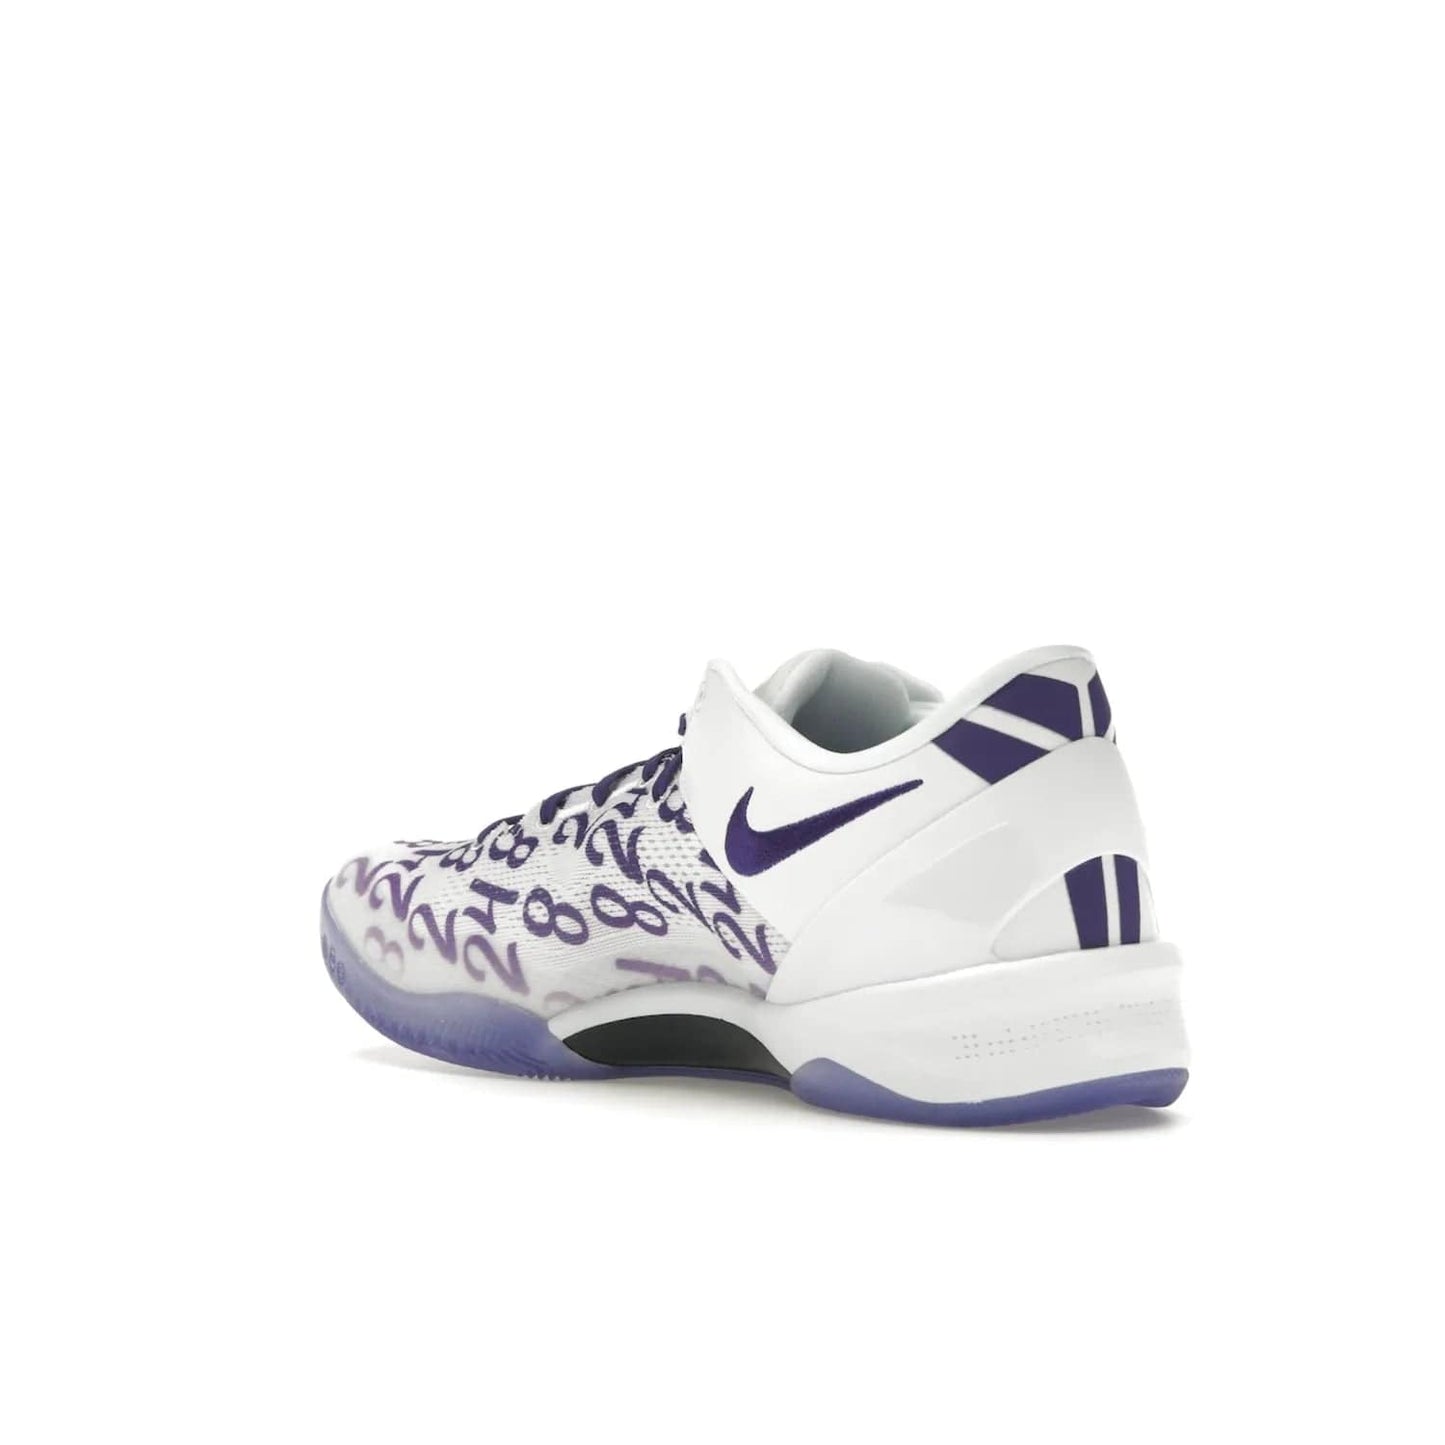 Nike Kobe 8 Protro Court Purple - Image 24 - Only at www.BallersClubKickz.com - 